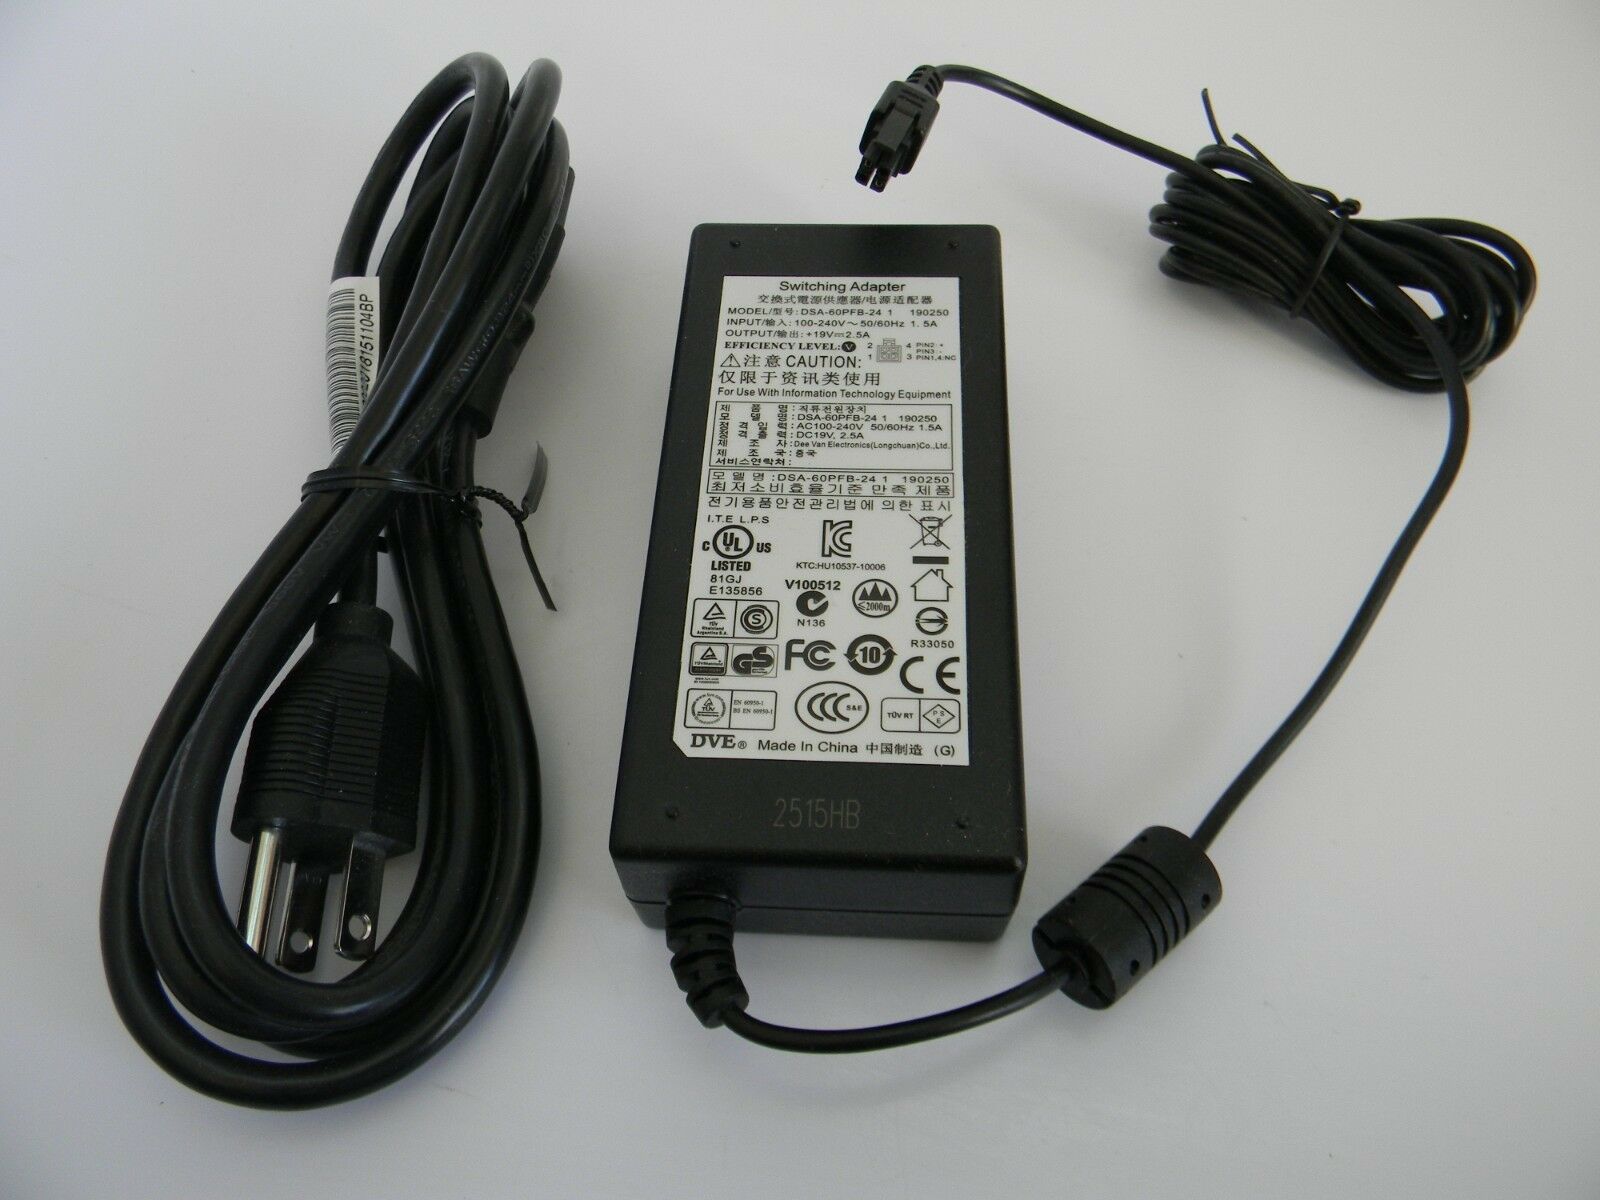 New DVE Switching Adapter DSA-60PFB-24 1 190250 DC Output 19V, 2.5A w / Cord Model: DSA – 60PFB – 24 1 240250 Type: - Click Image to Close